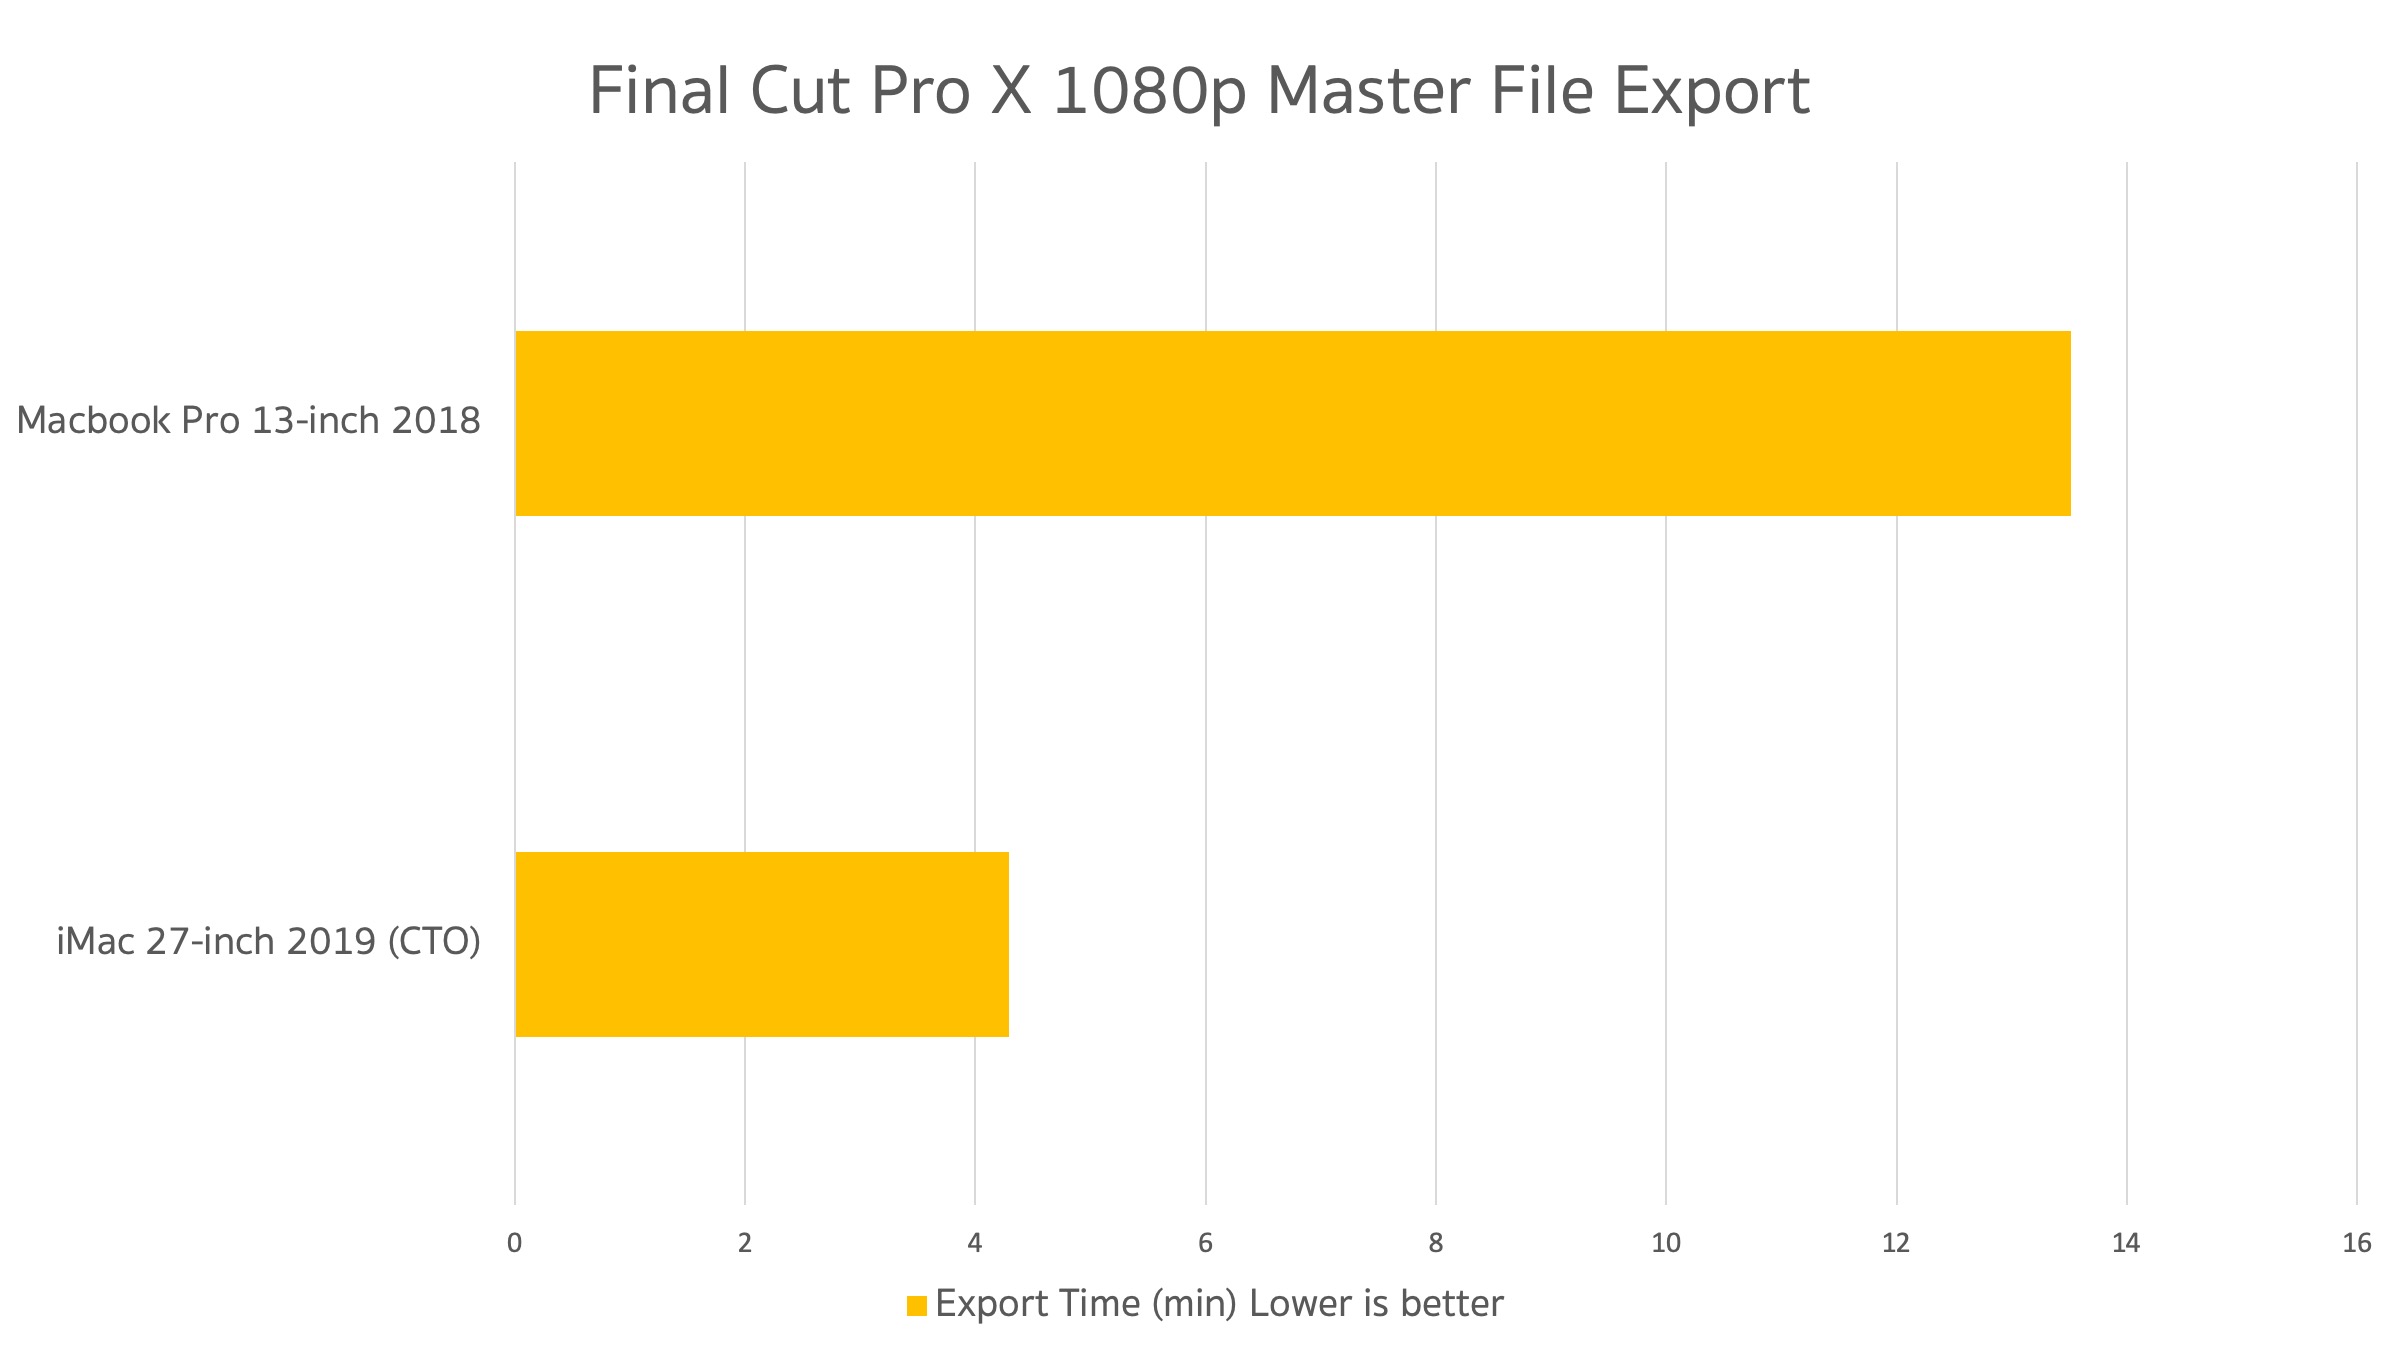 Final Cut Pro X Export Time